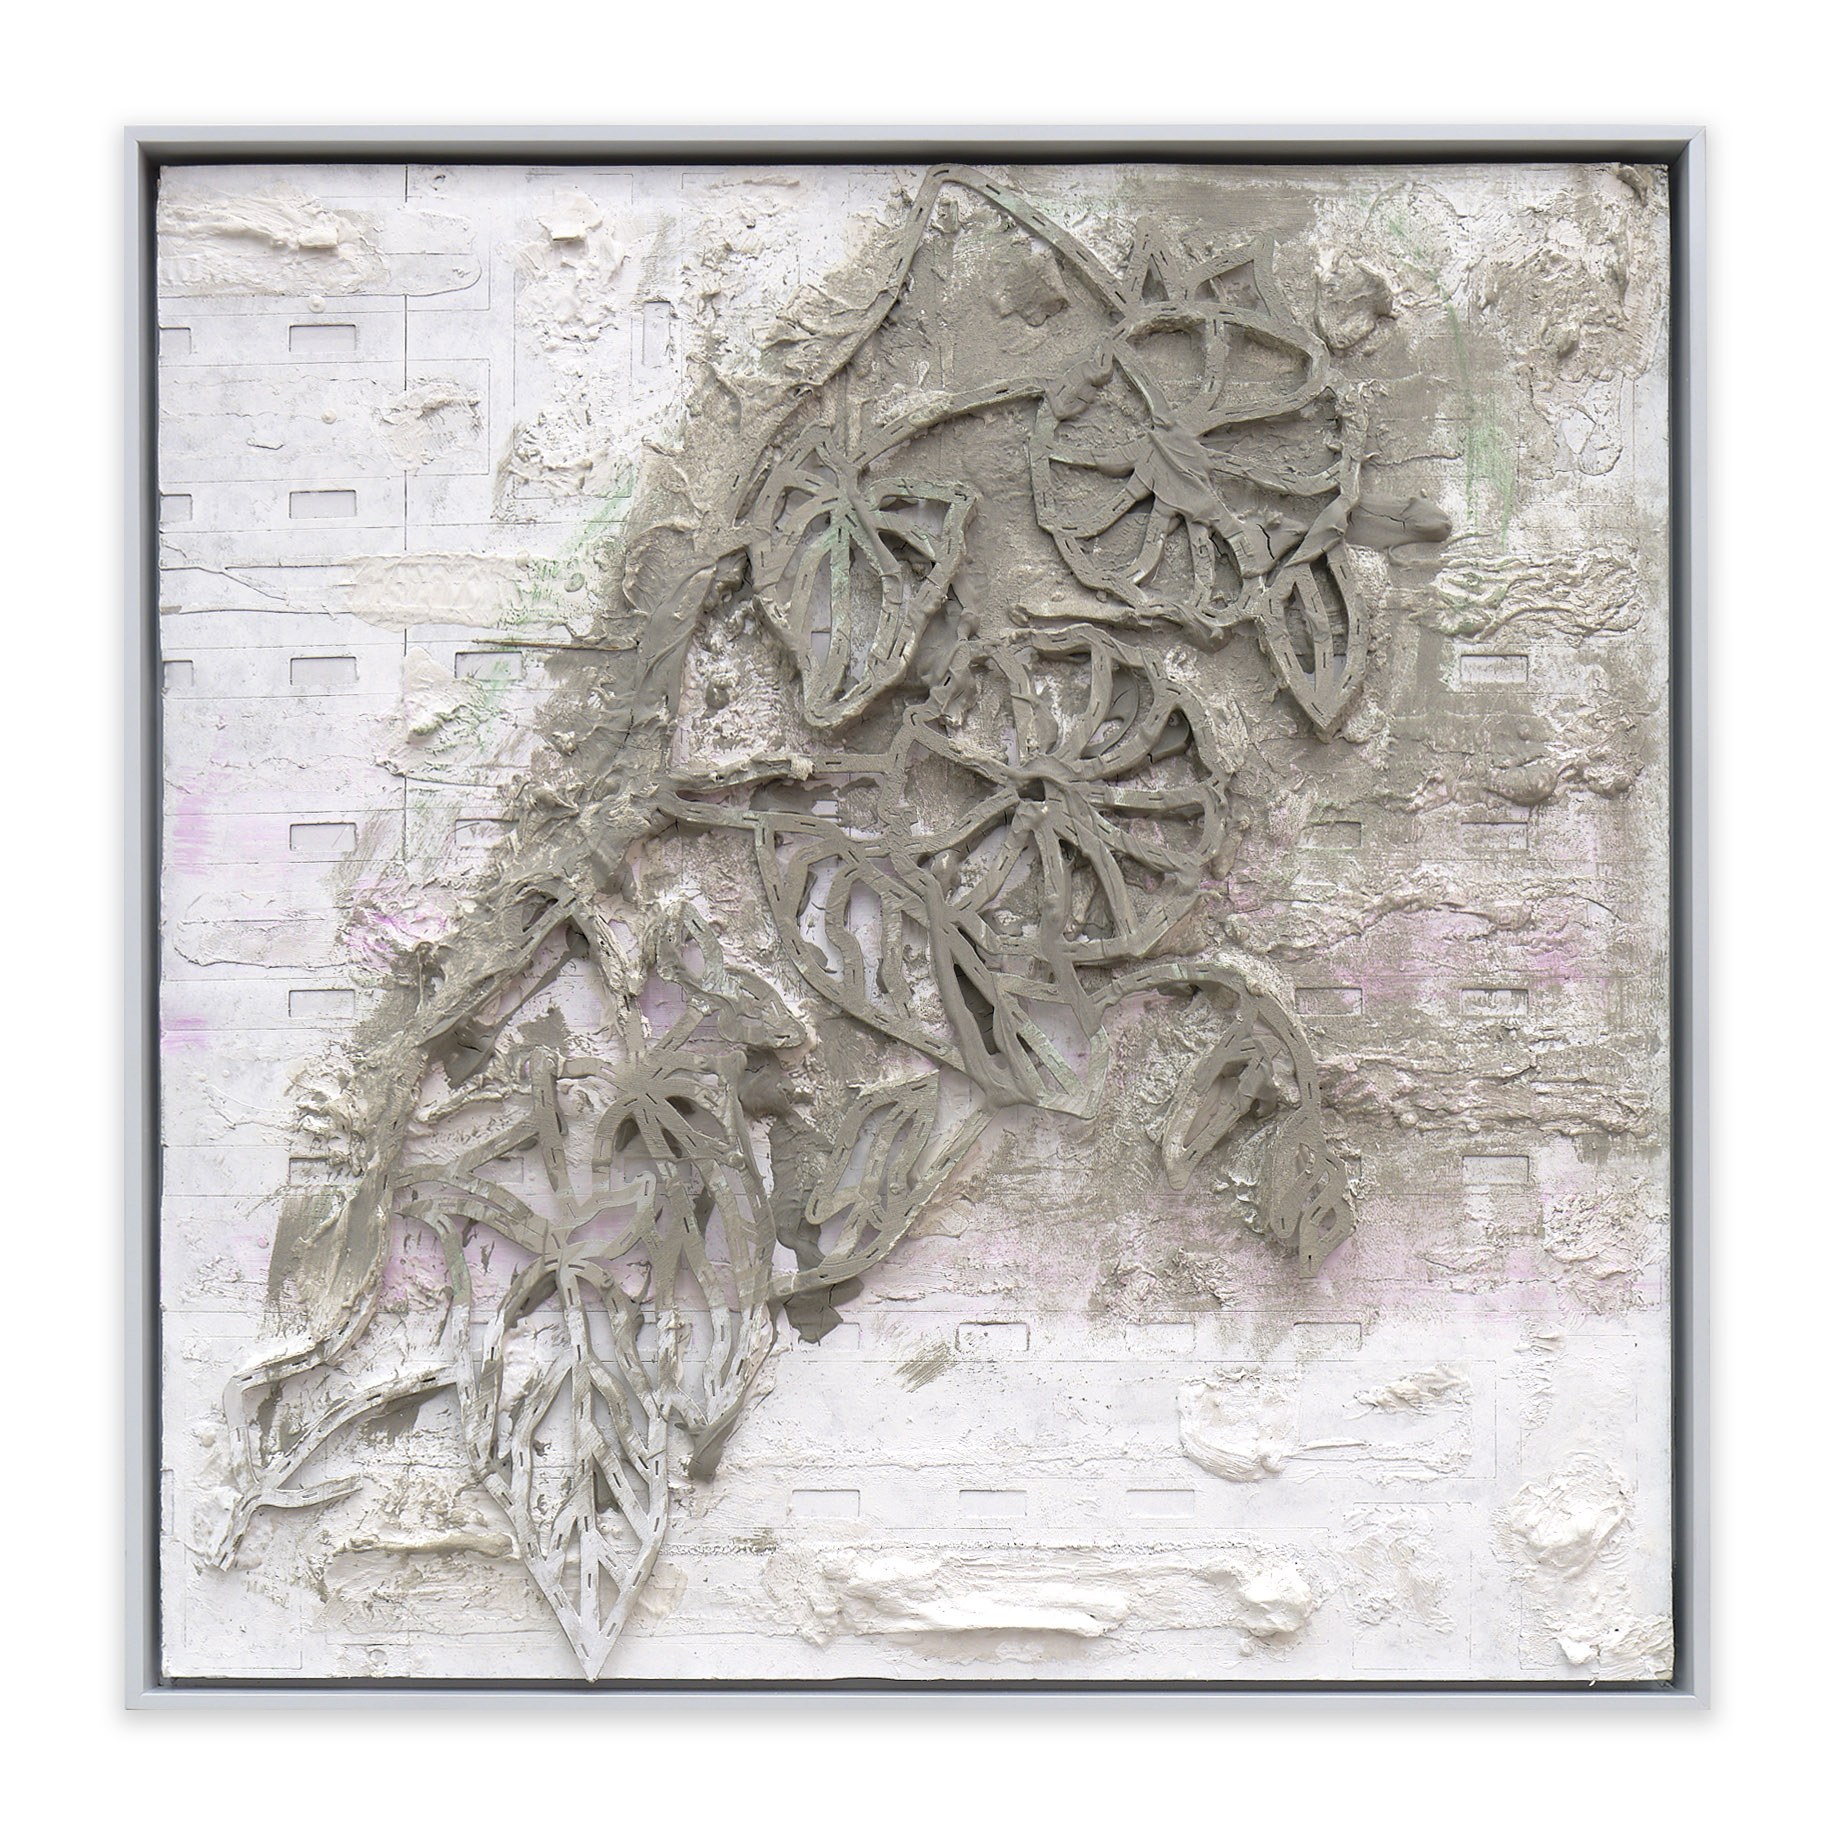 Thomas Bayrle, Vollgeschmiert 3, 2017, 90 x 90 cm, Acrylic, Cardboard